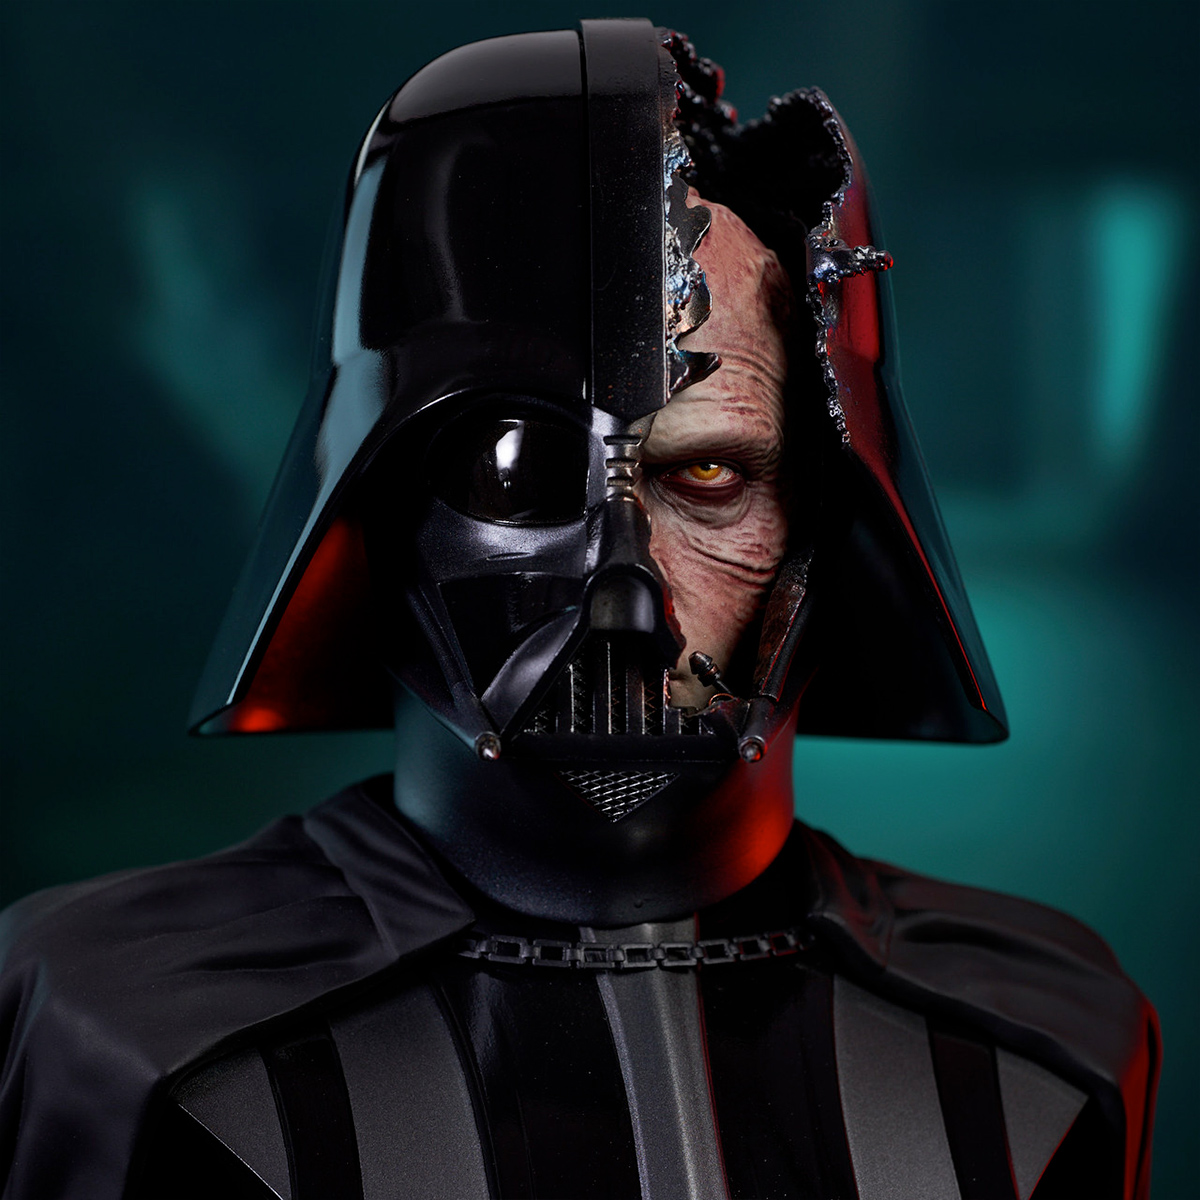 Busto Star Wars Legends in 3D: Darth Vader com Capacete Danificado da Série Obi-Wan Kenobi